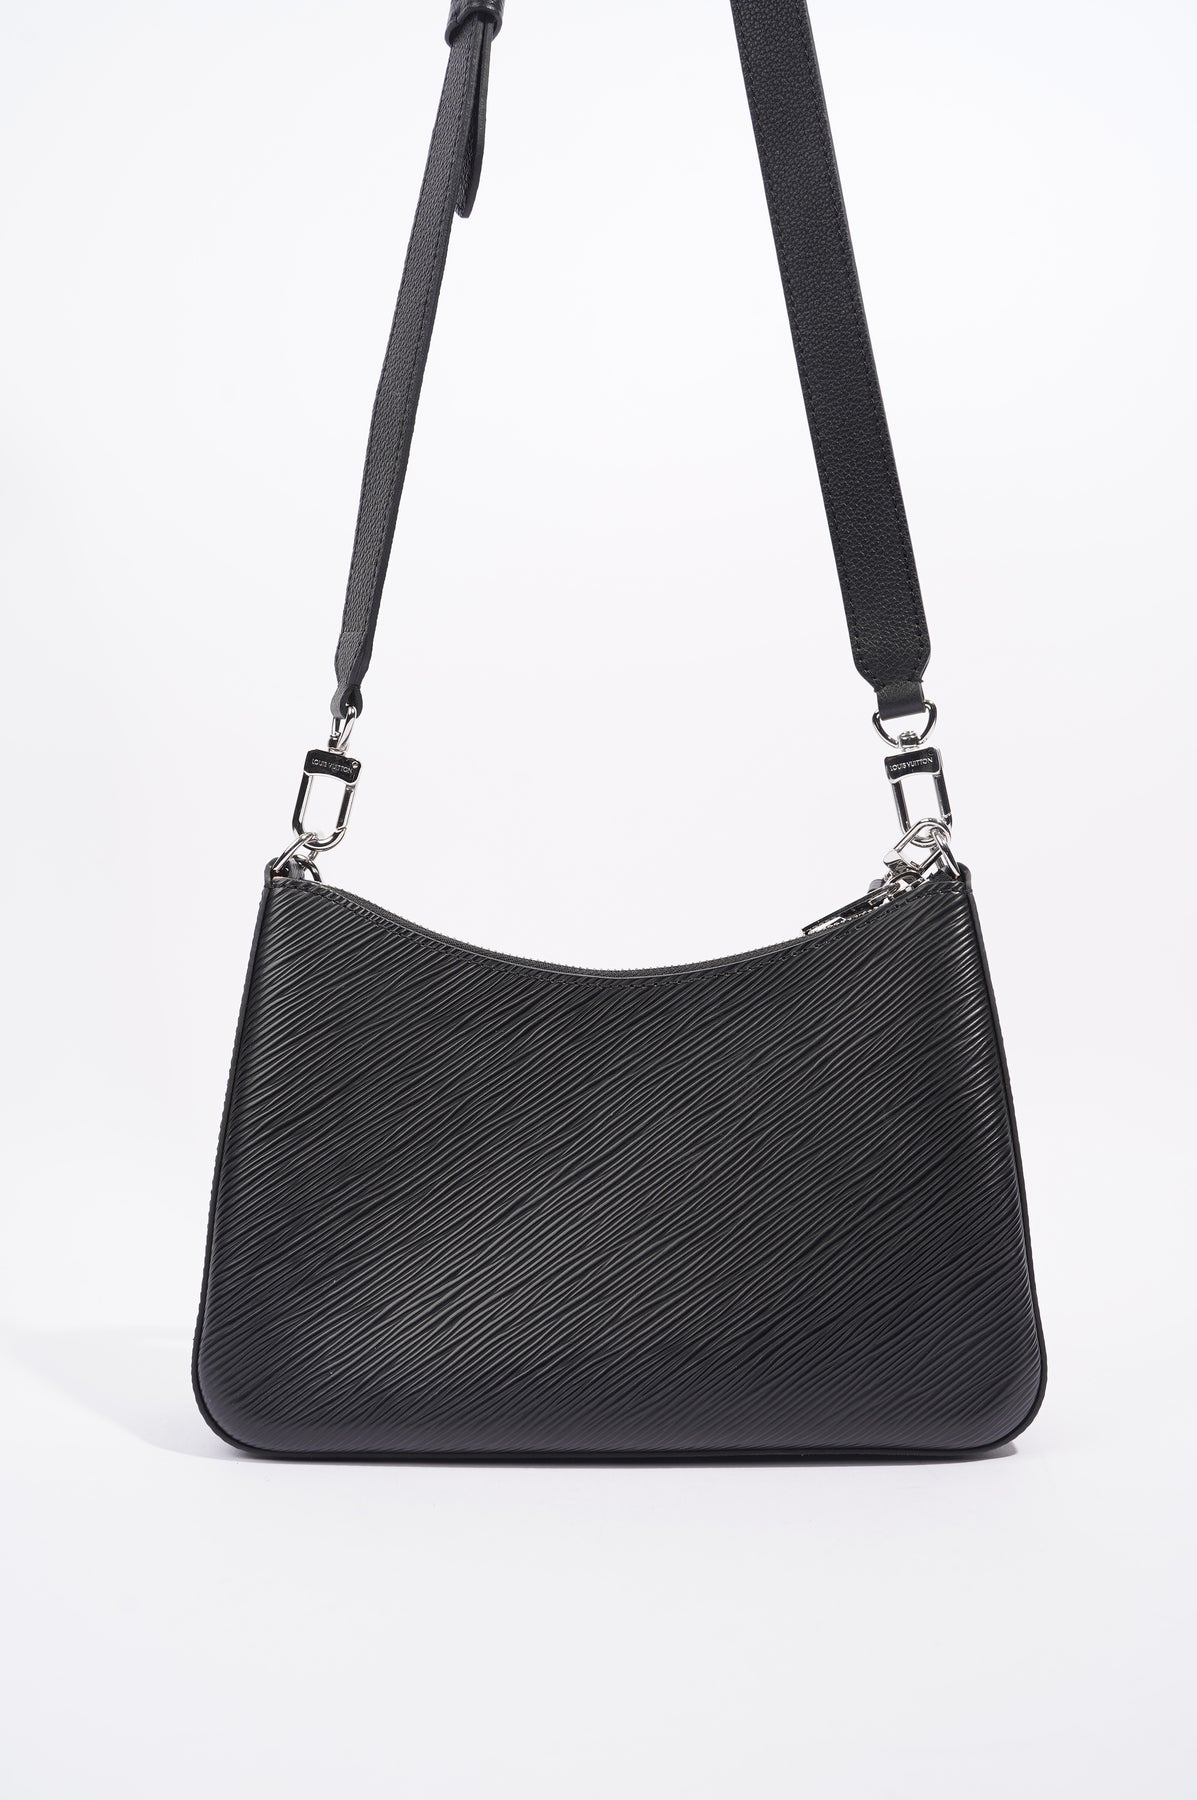 Marelle Epi Leather Handbag - LB187